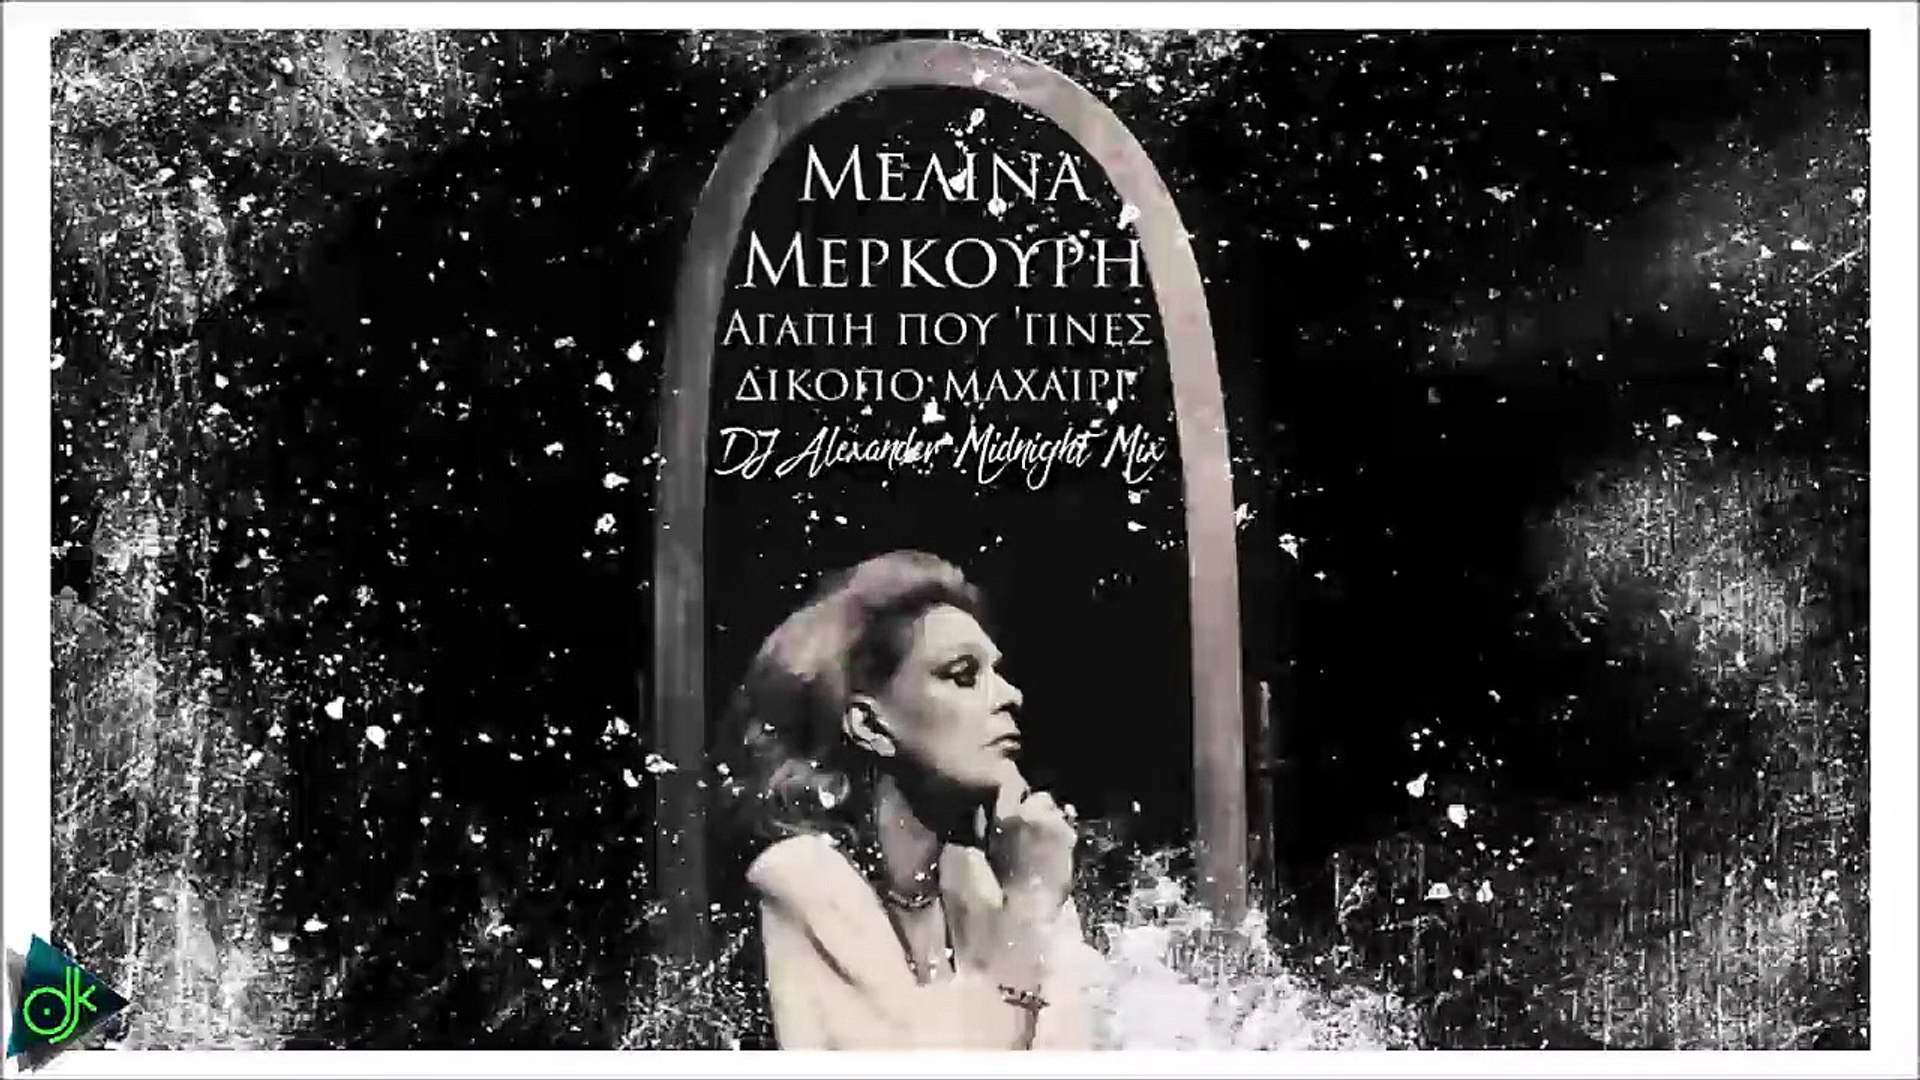 Monarch housewife Perth Μελίνα Μερκούρη - Αγάπη Που 'Γινες Δίκοπο Μαχαίρι (DJ Alexander Midnight  Mix) - video Dailymotion